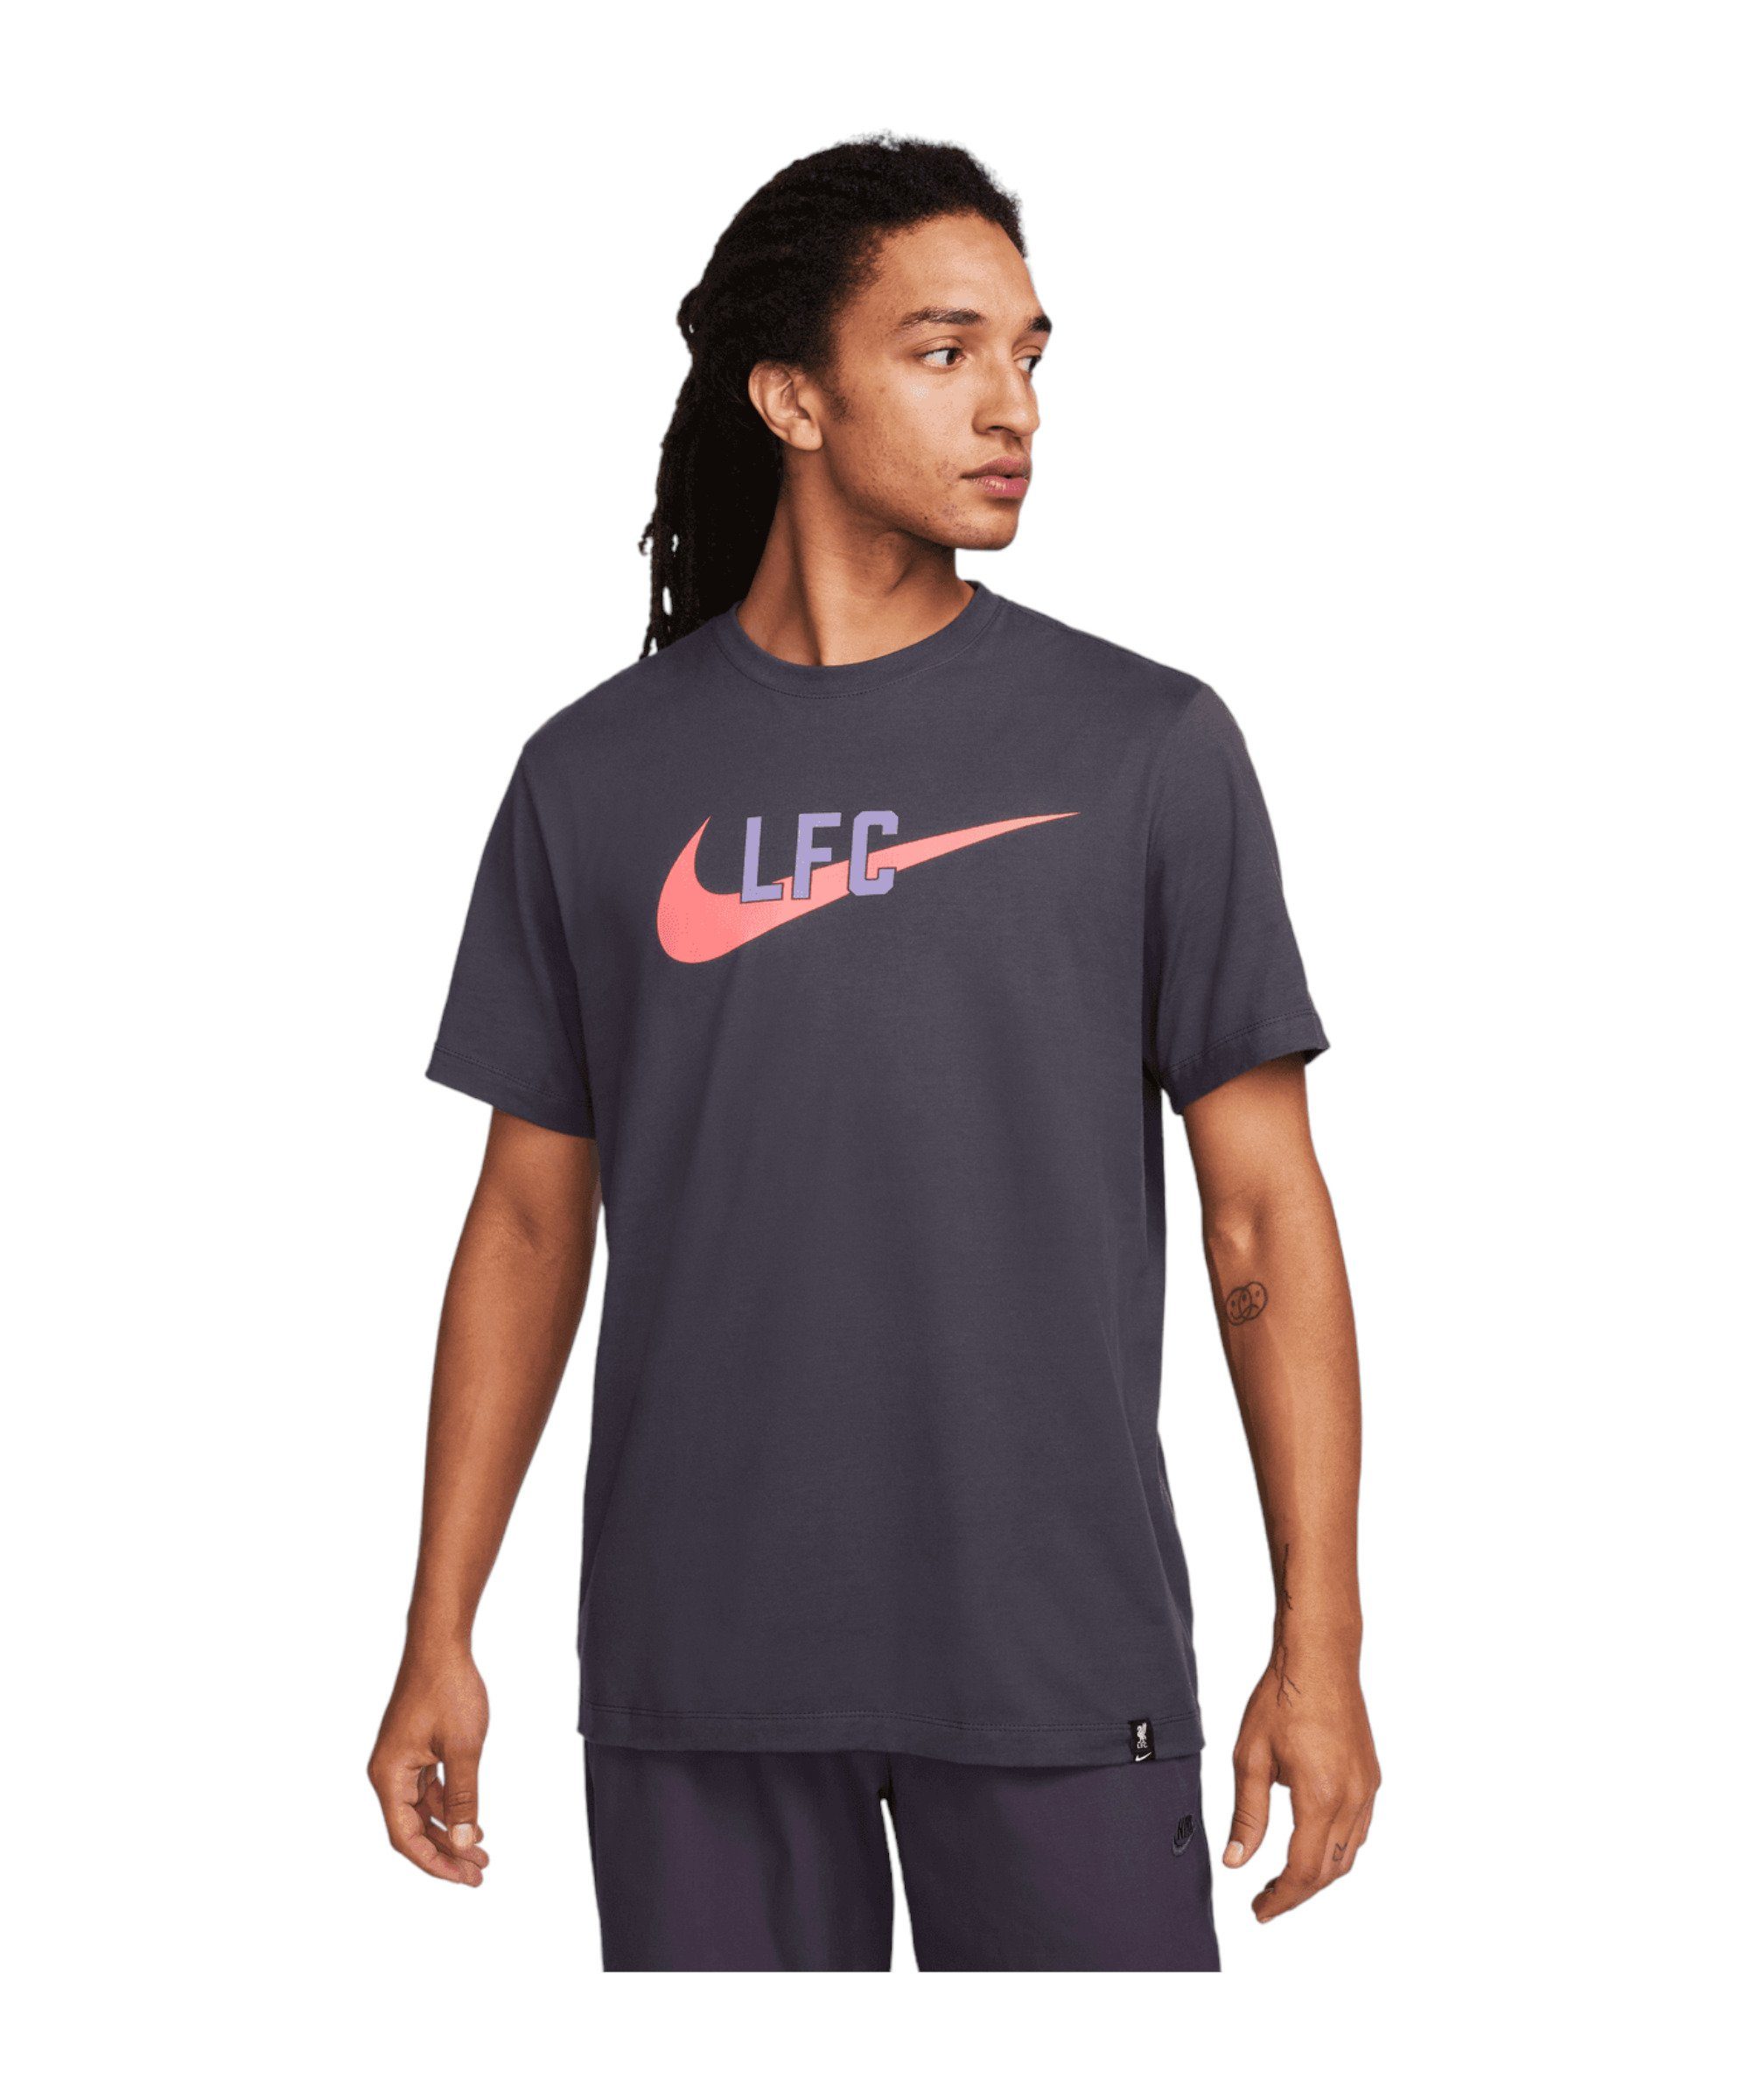 T-Shirt Nike Swoosh default T-Shirt grau FC Liverpool